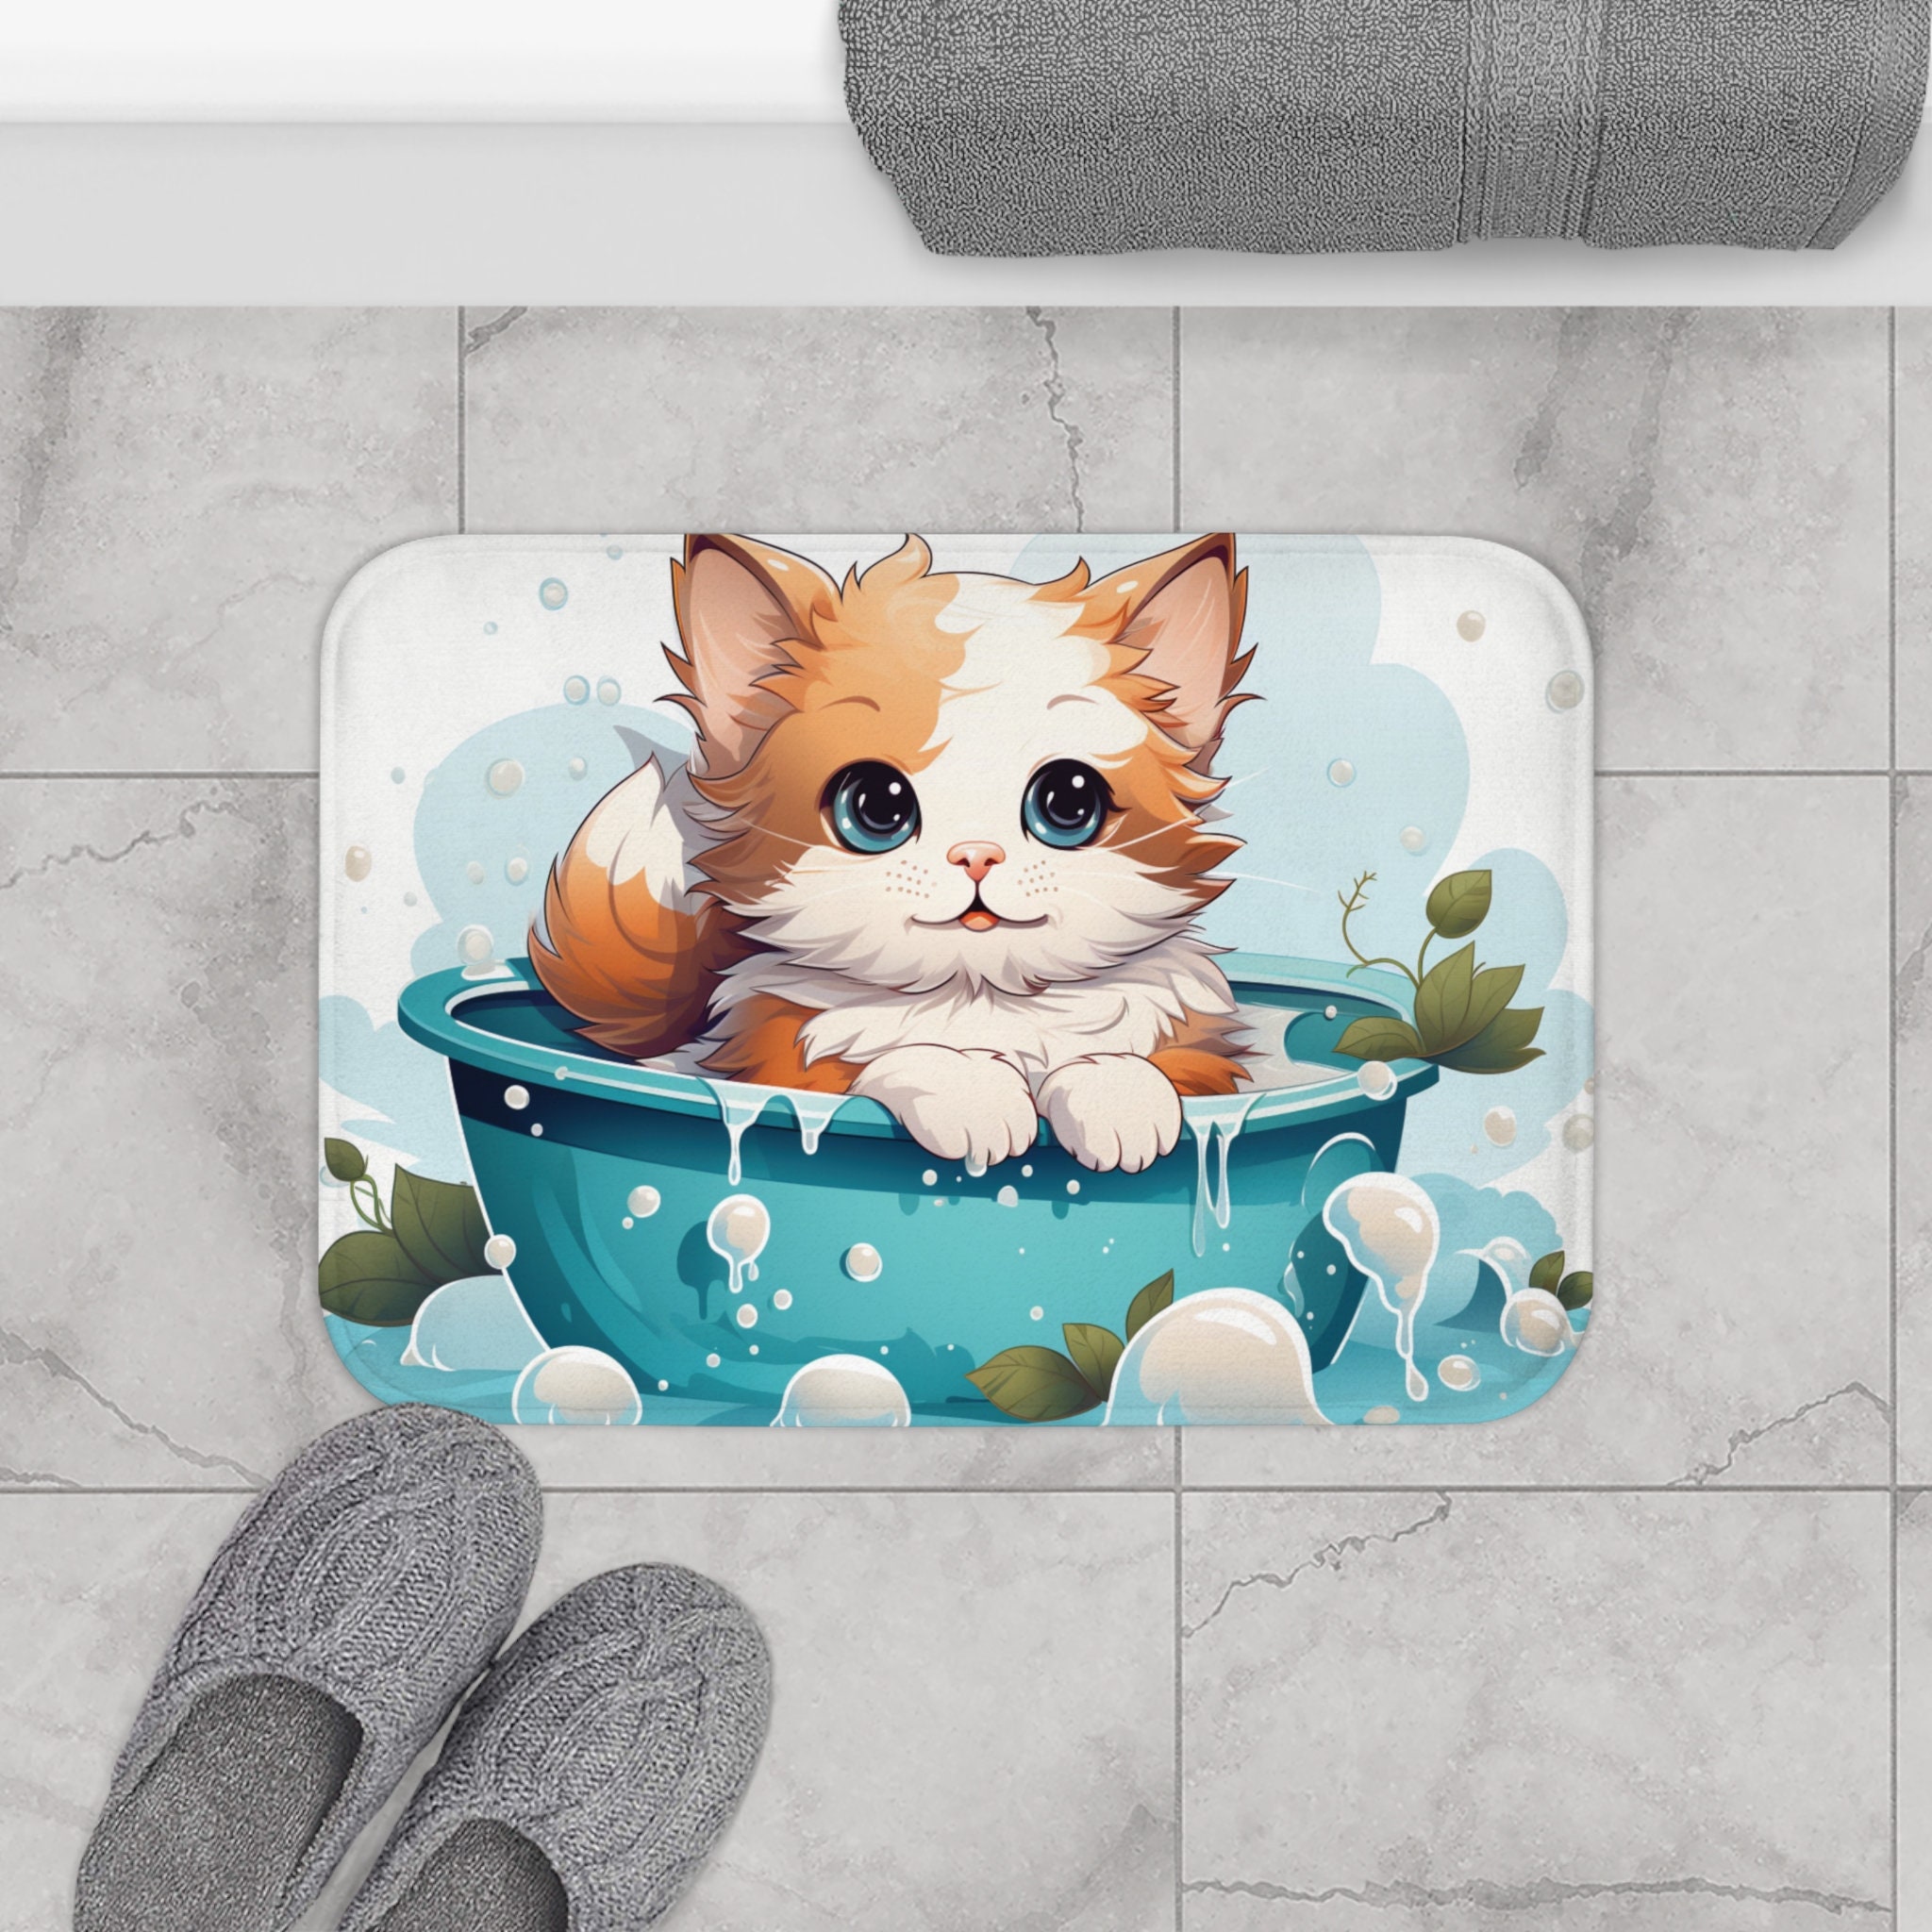 NIGOWAYS Cat Doormat - Cat Welcome Mat,Cute and Soft Cat Rug,Black Cat Bath  Mats for Bathroom, Bedroom,Non Slip Washable Rug (31 * 28 Inch)